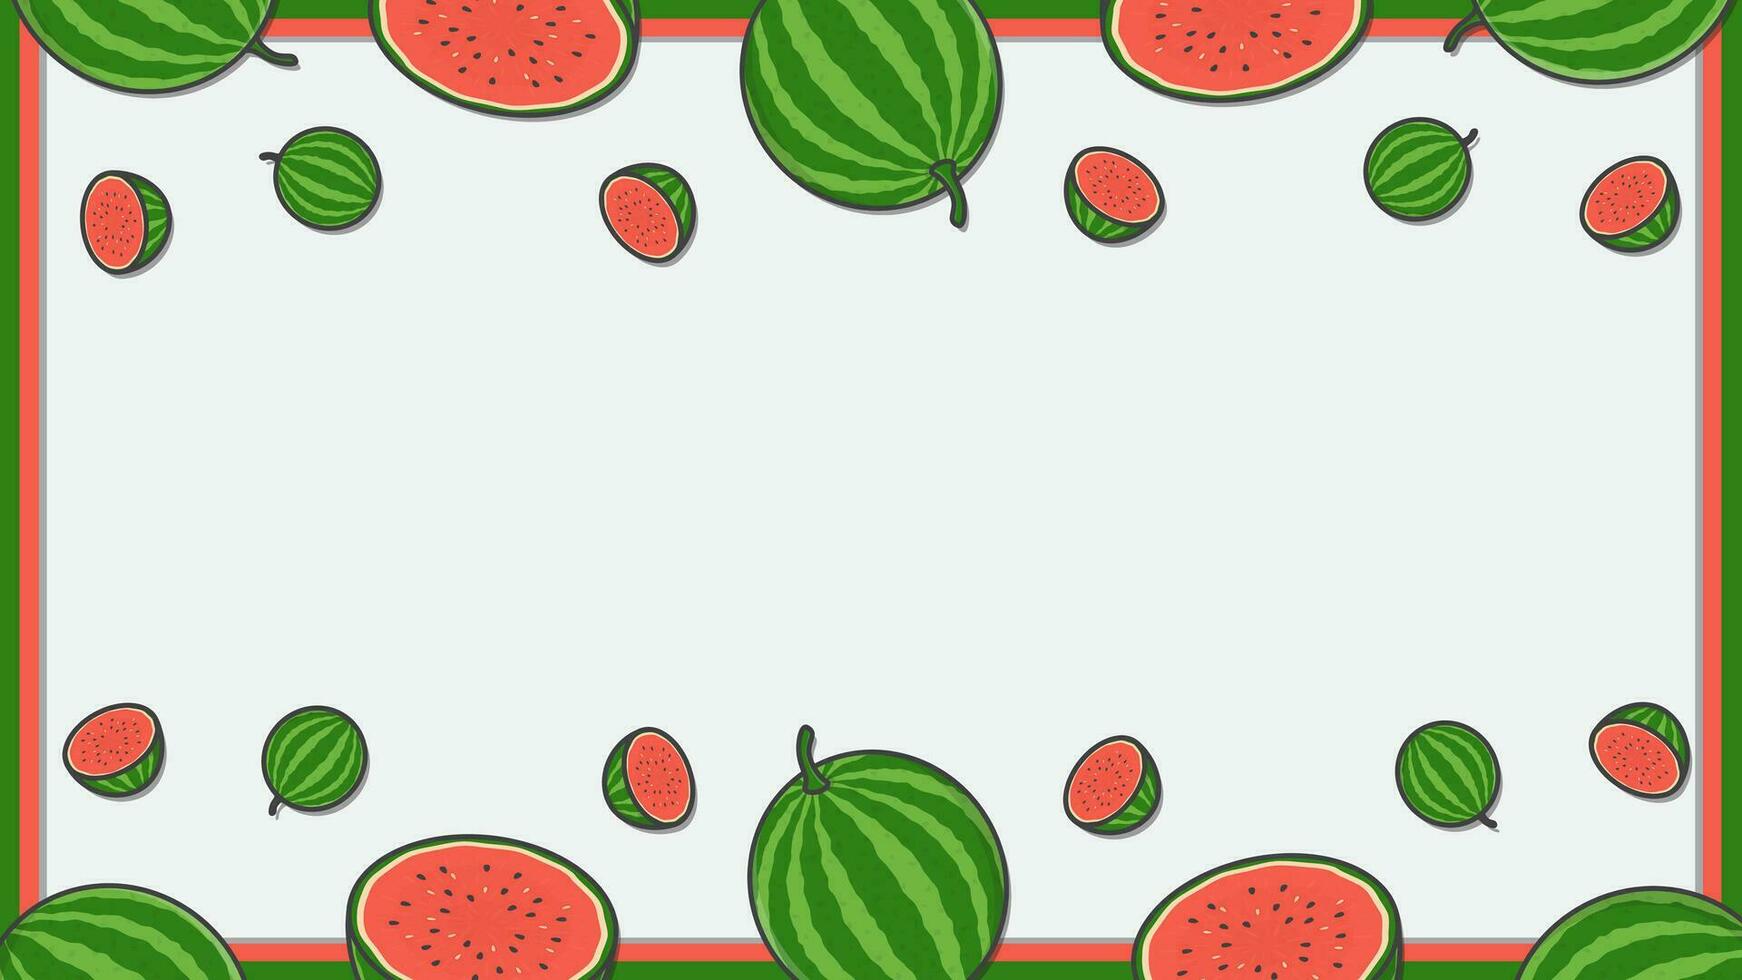 Watermelon Fruit Background Design Template. Watermelon Fruit Cartoon Vector Illustration. Fruit